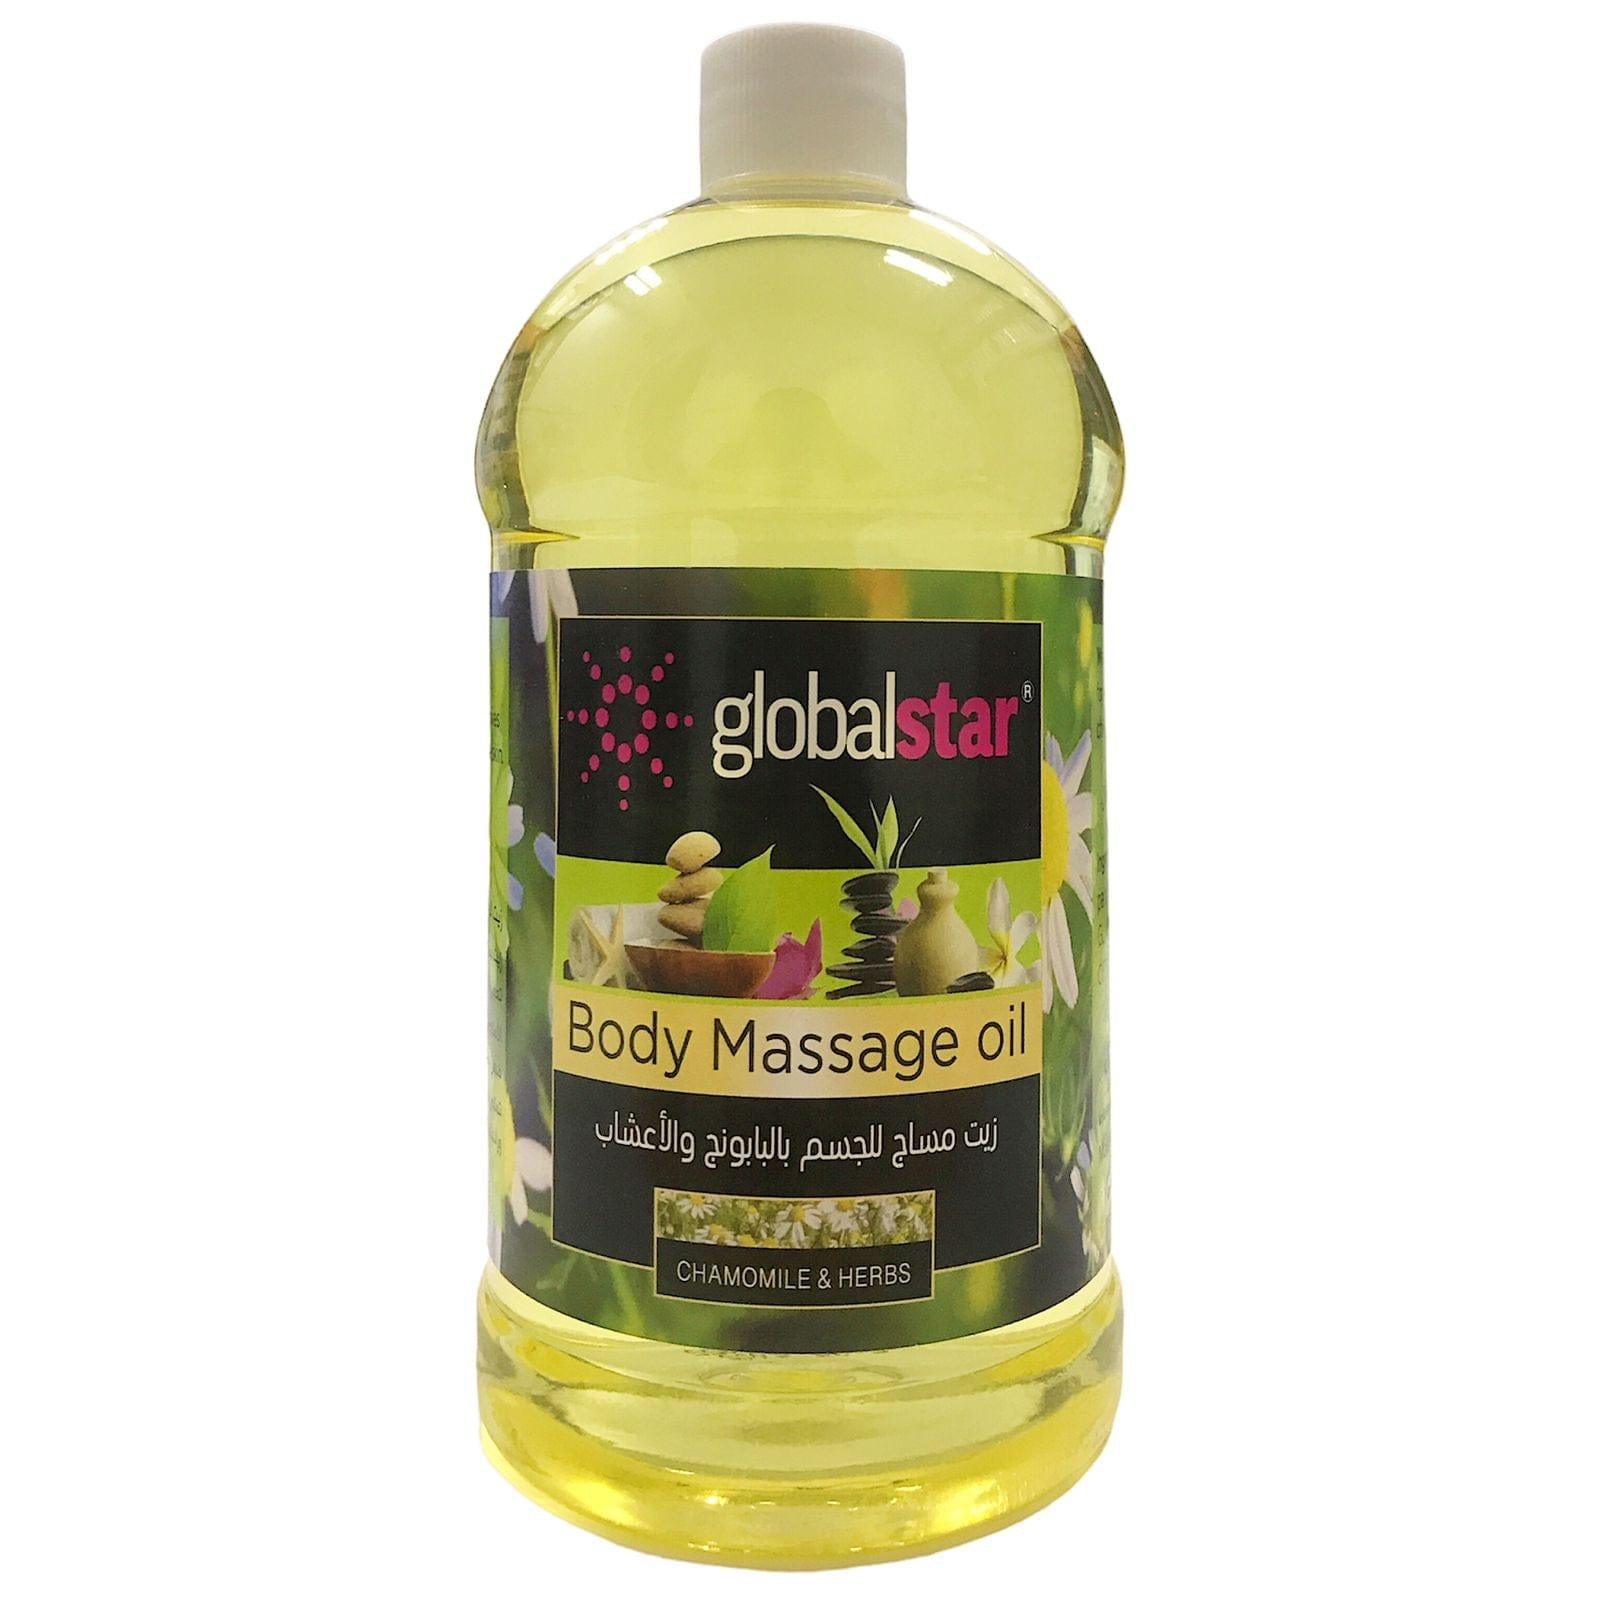 Globalstar Body Massage Oil Chamomile & Herbs Scent 1000ml